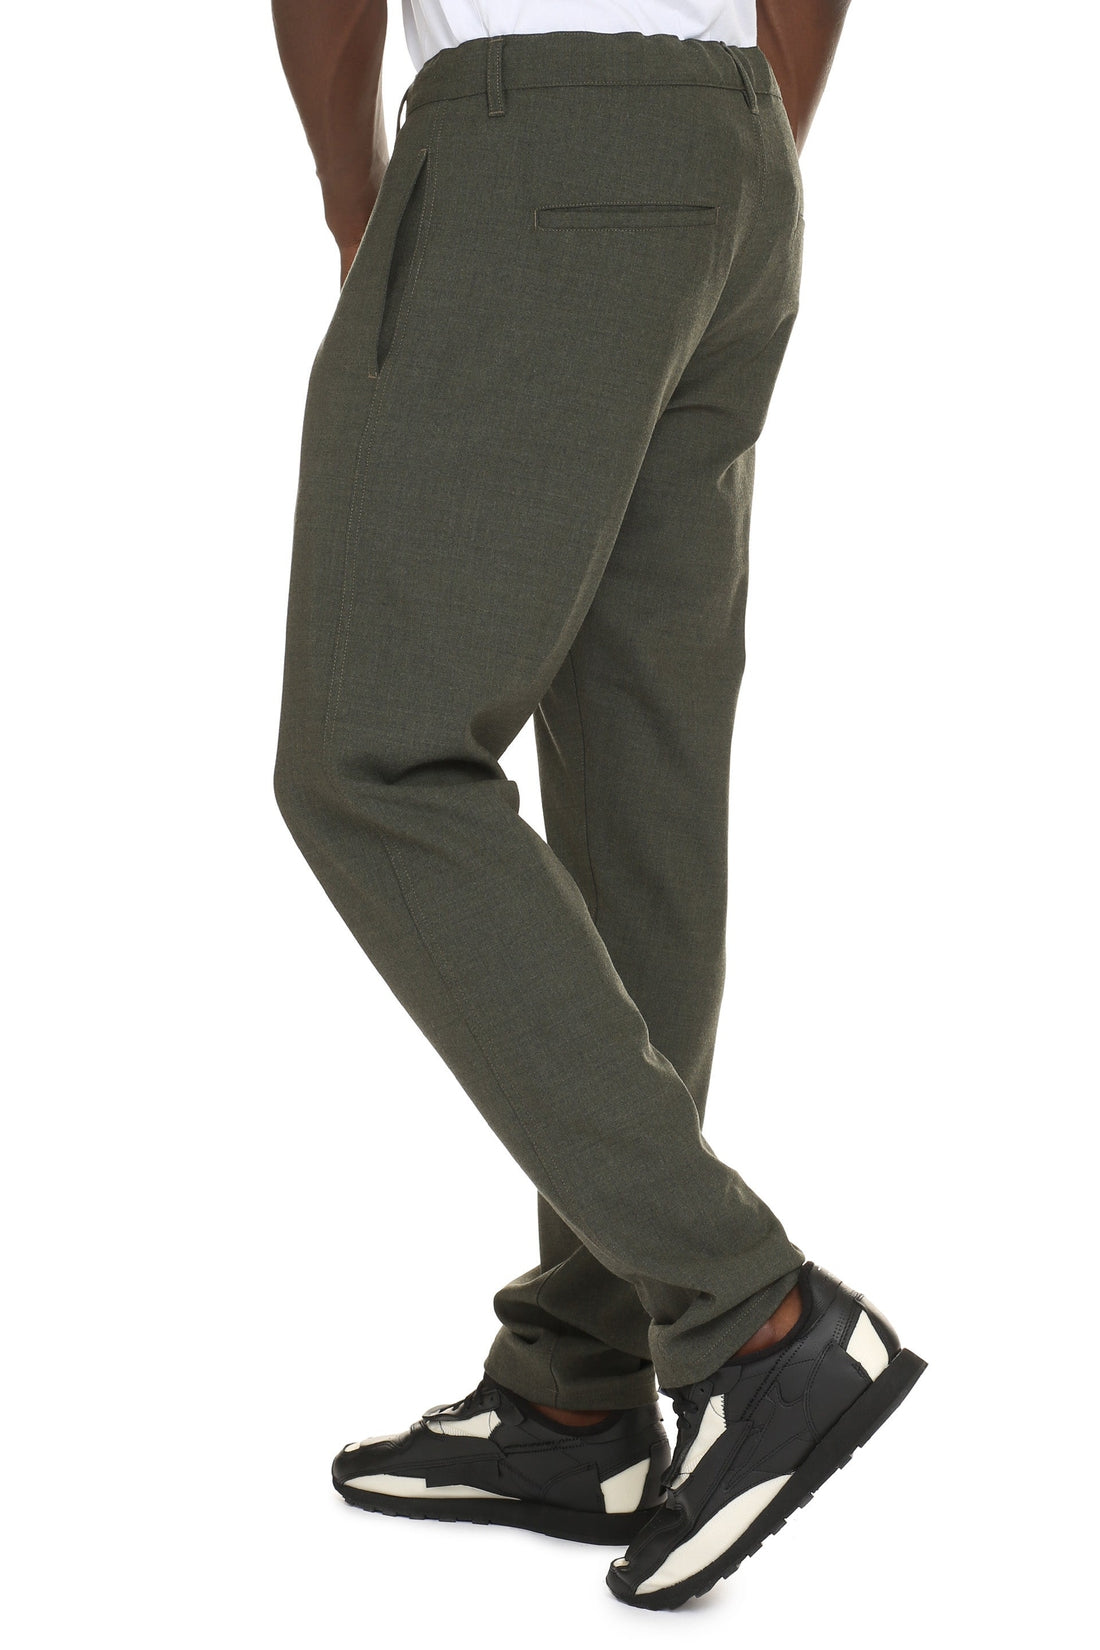 Aspesi-OUTLET-SALE-Wool blend trousers-ARCHIVIST